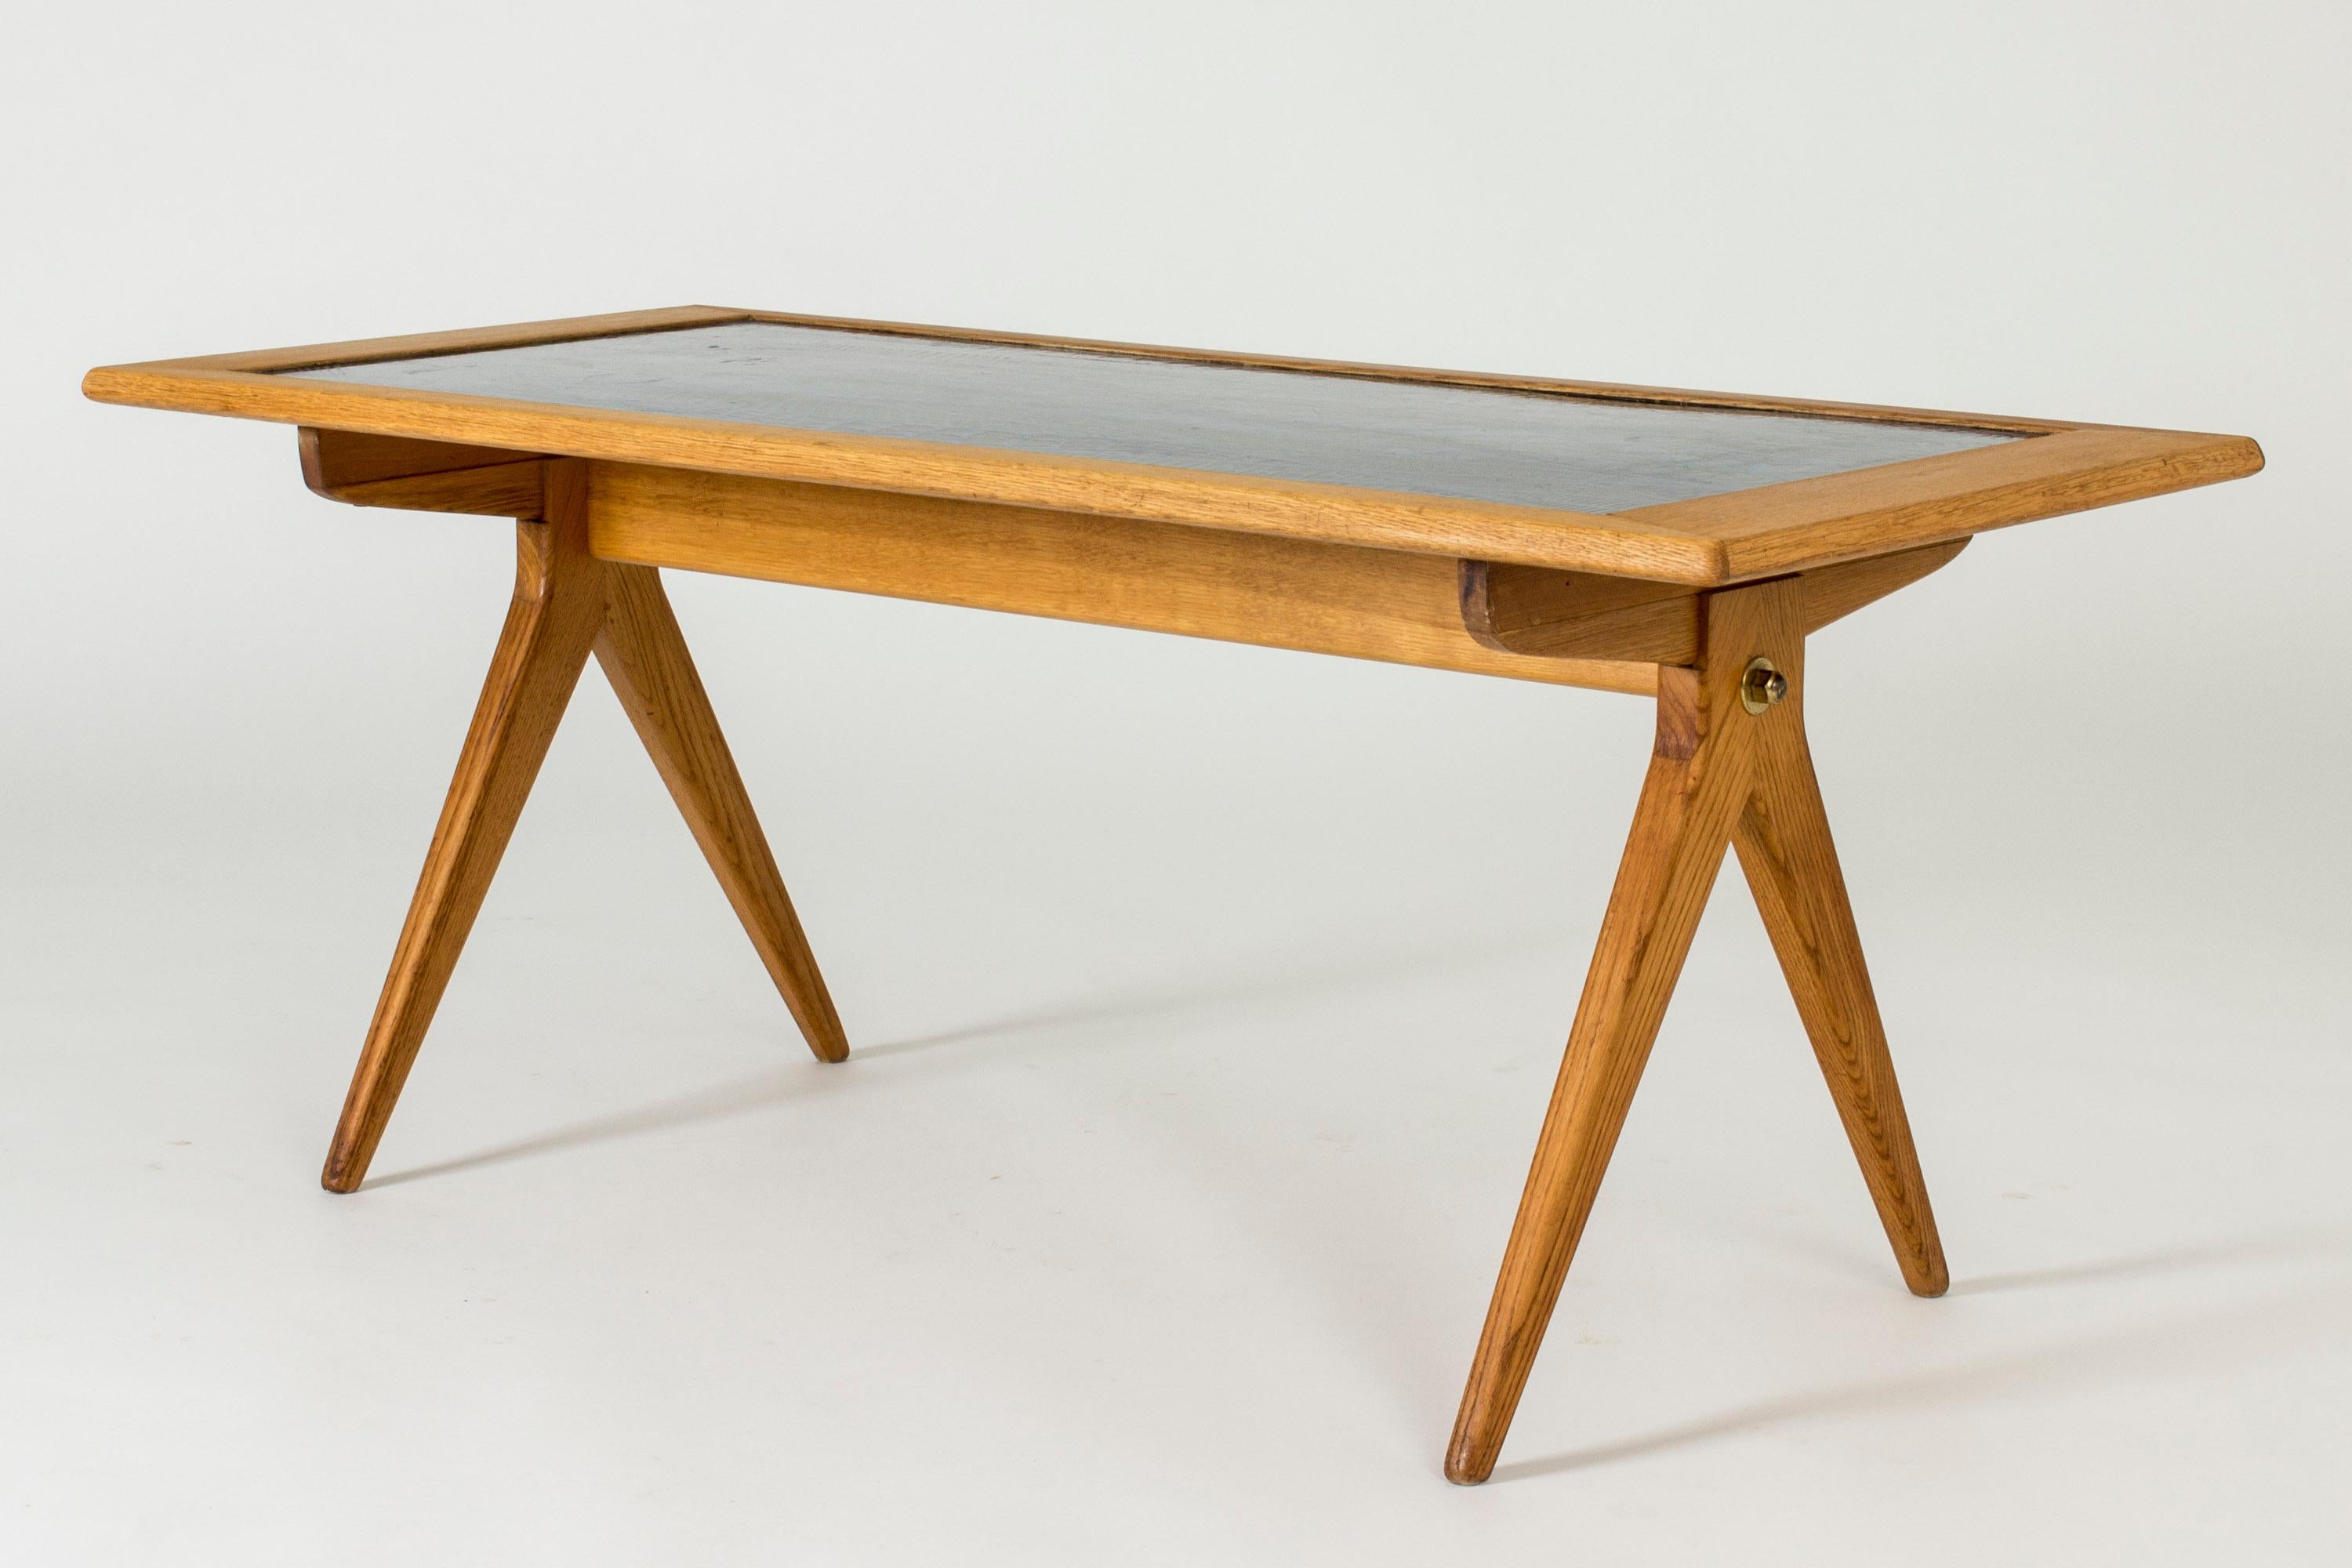 Coffee table by Stig Lindberg, designed for NK. Striking enamel table top with an undulating, underwater motif, set in an elegant oak frame.